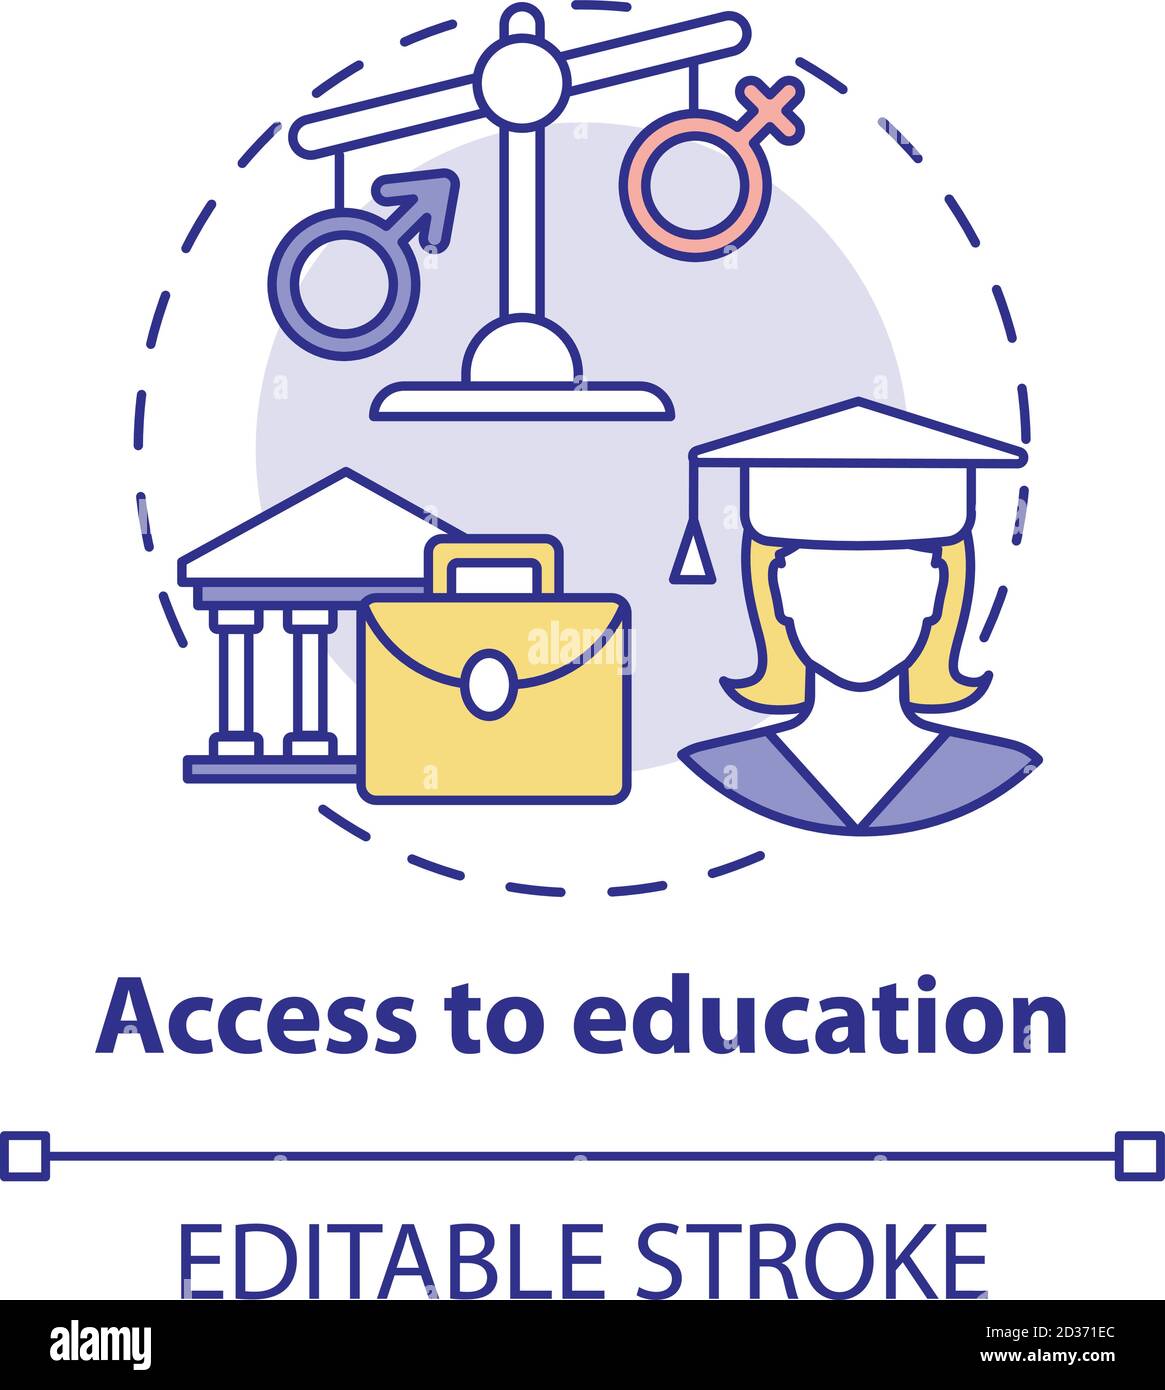 Access to education concept icon Stock Vector